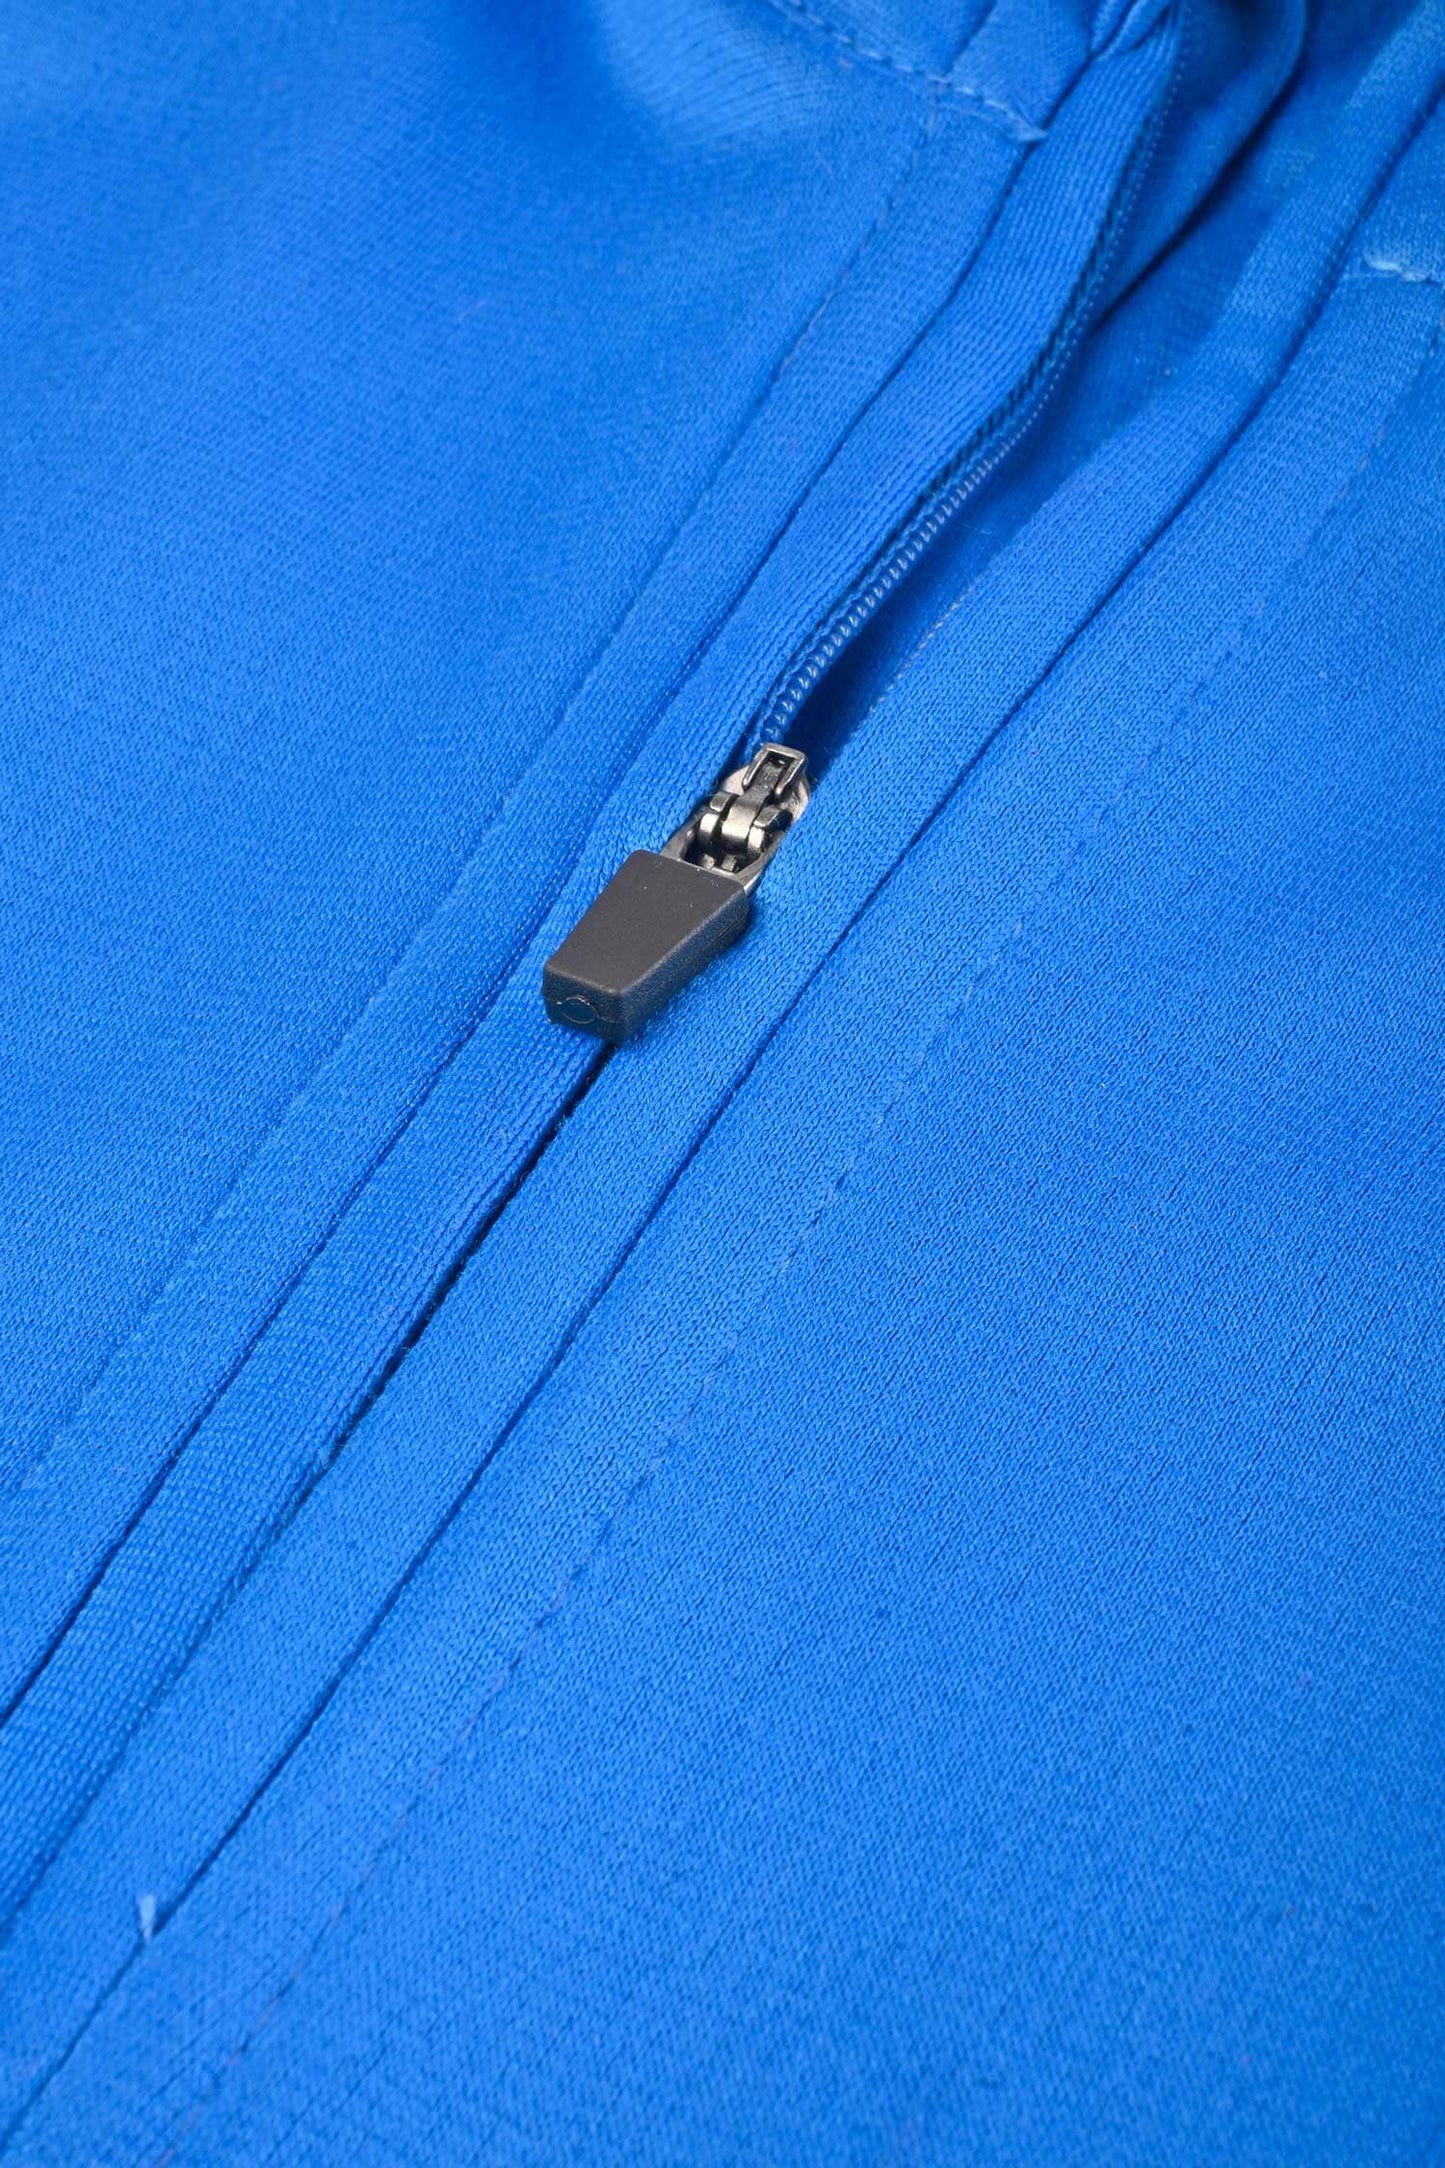 Proact Men's Threading Detail Style Activewear Quarter Zipper Sweat Shirt Men's Sweat Shirt HAS Apparel 